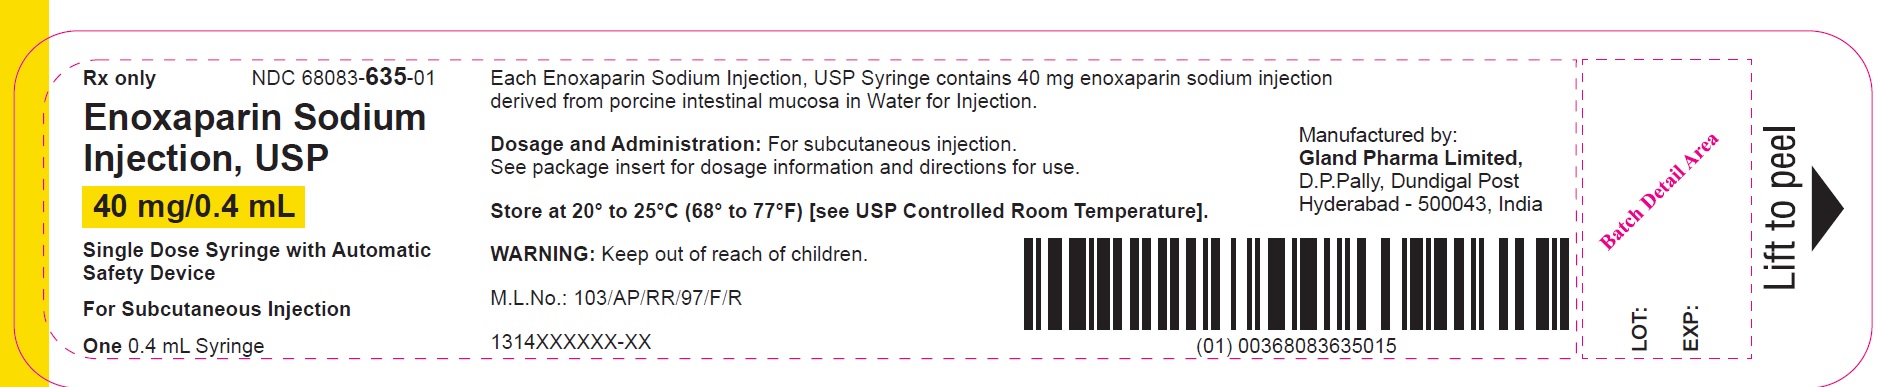 enoxaparin-spl-blister-label-40-mg